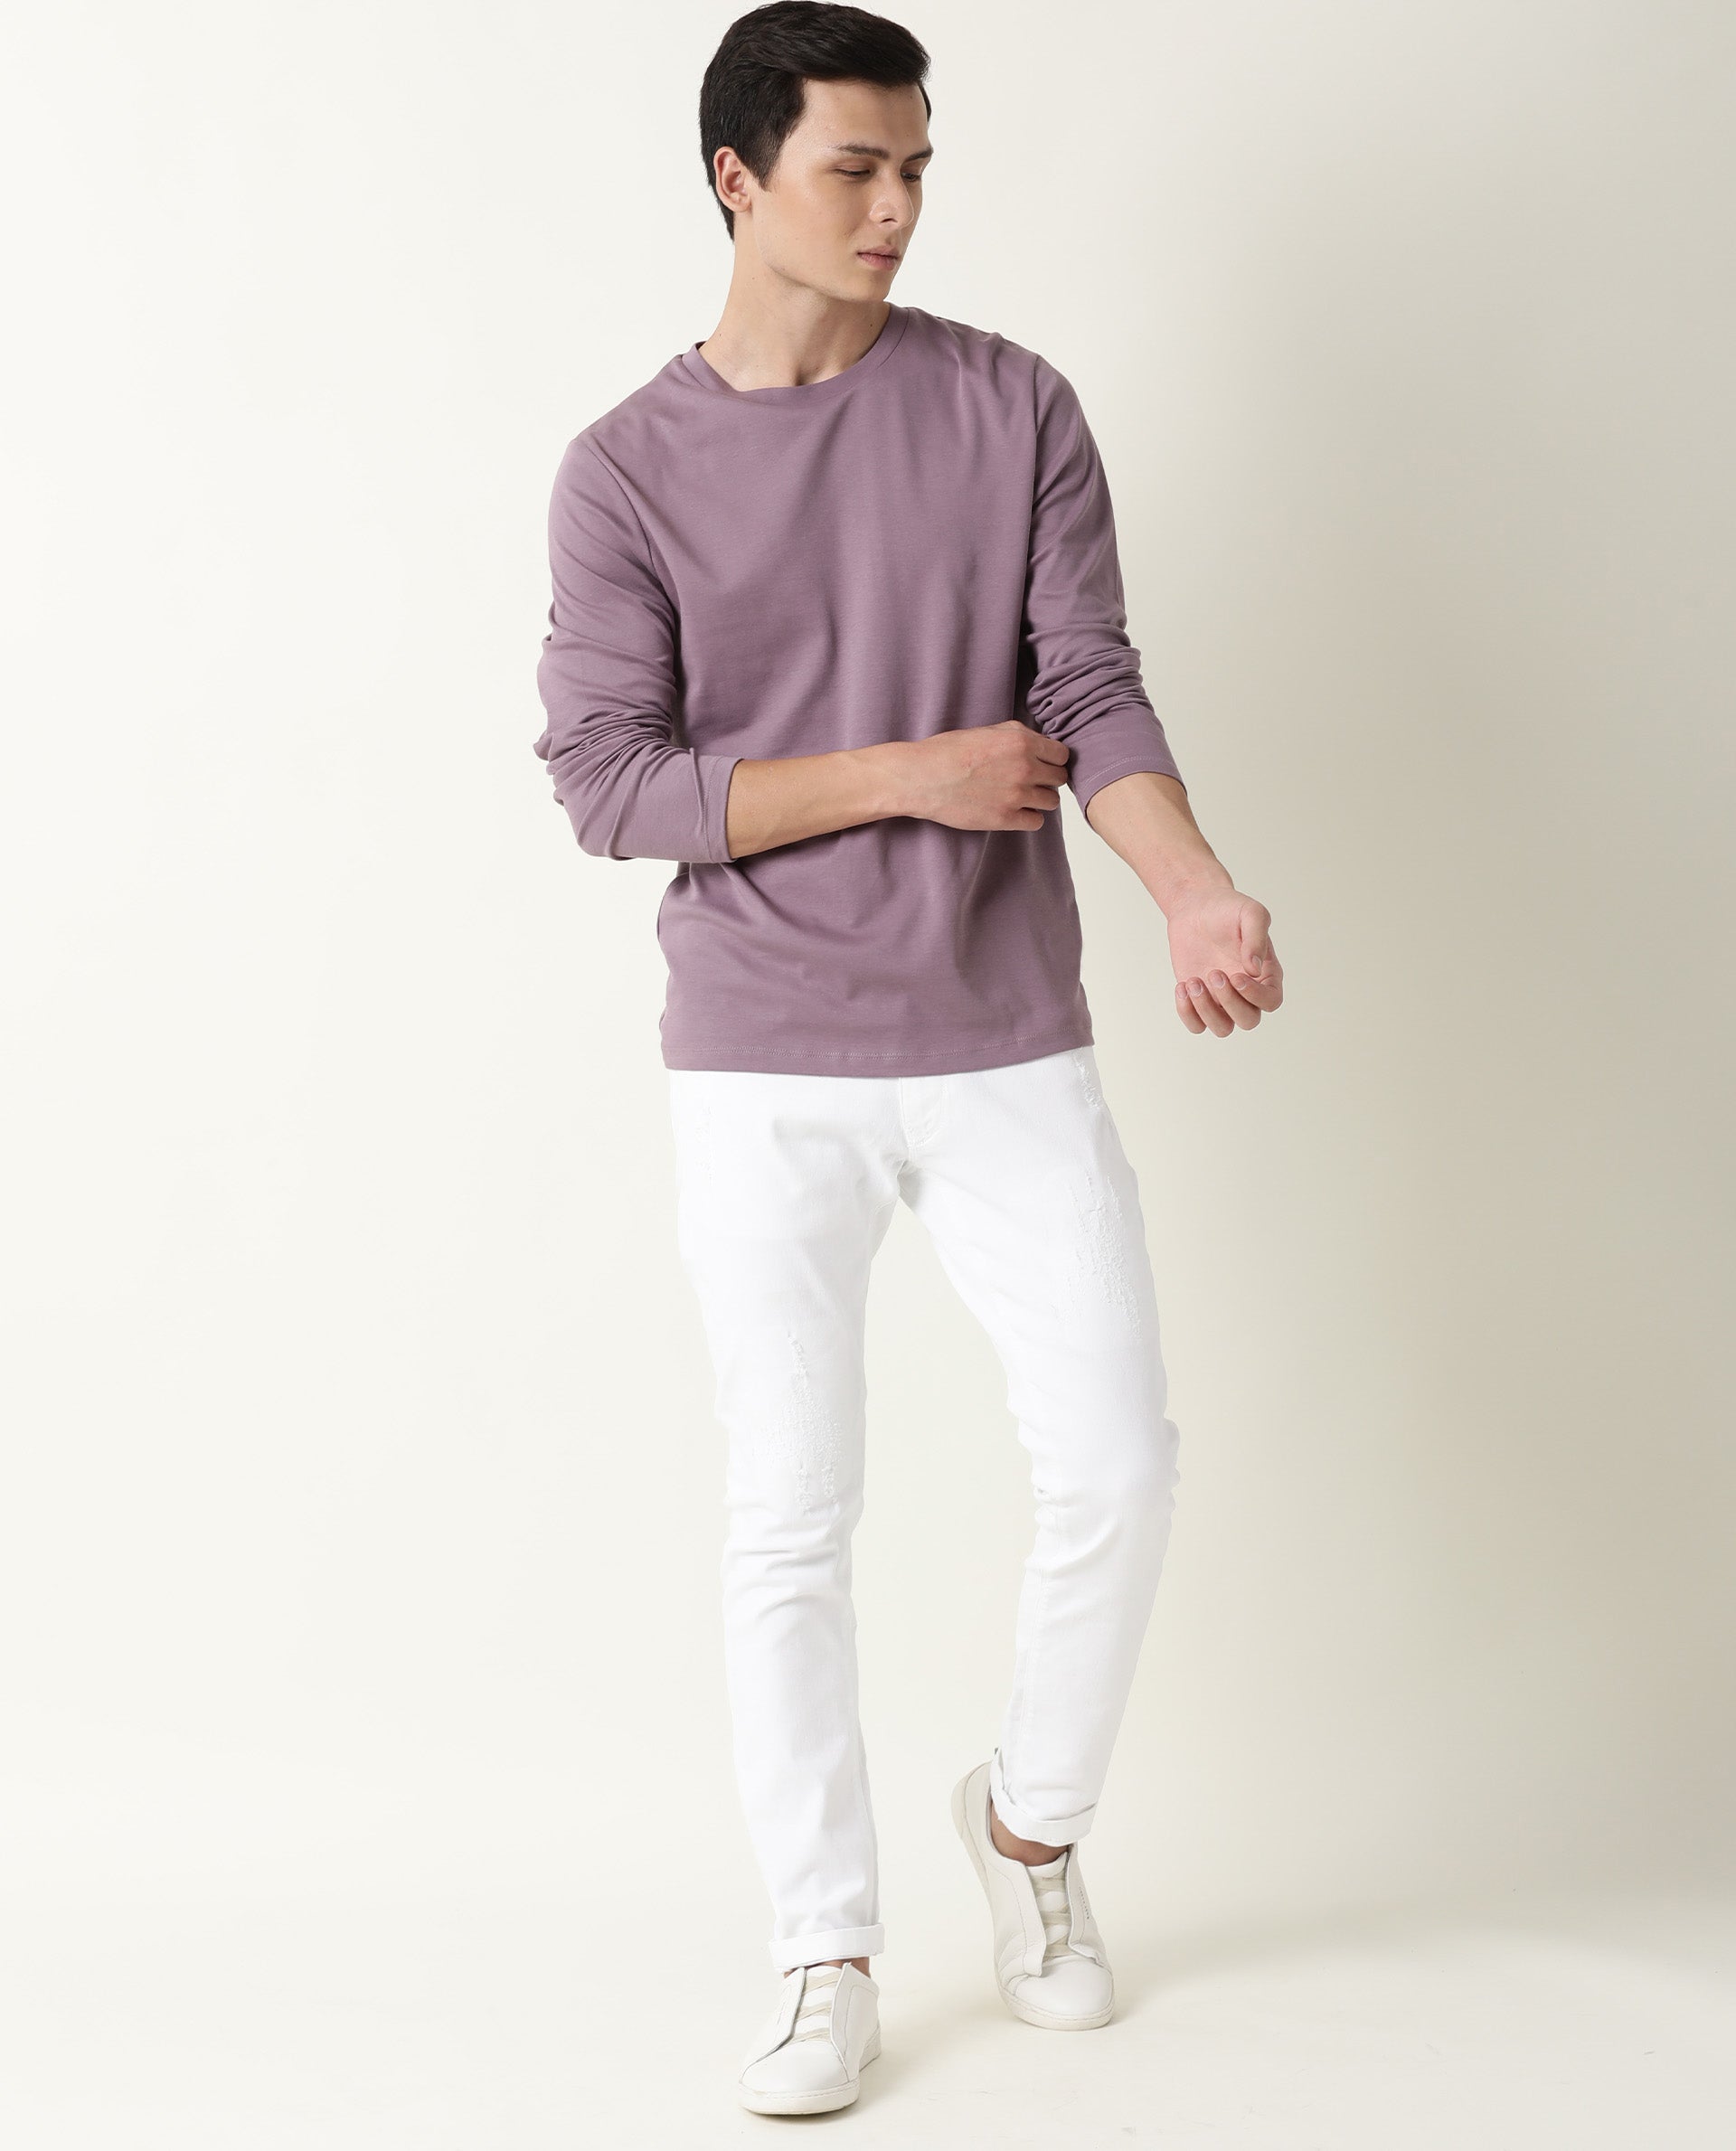 Men's Full Purple T-shirt Cotton Lycra Fabric Crew Neck Slim Fit - T-SHIRT LOVER